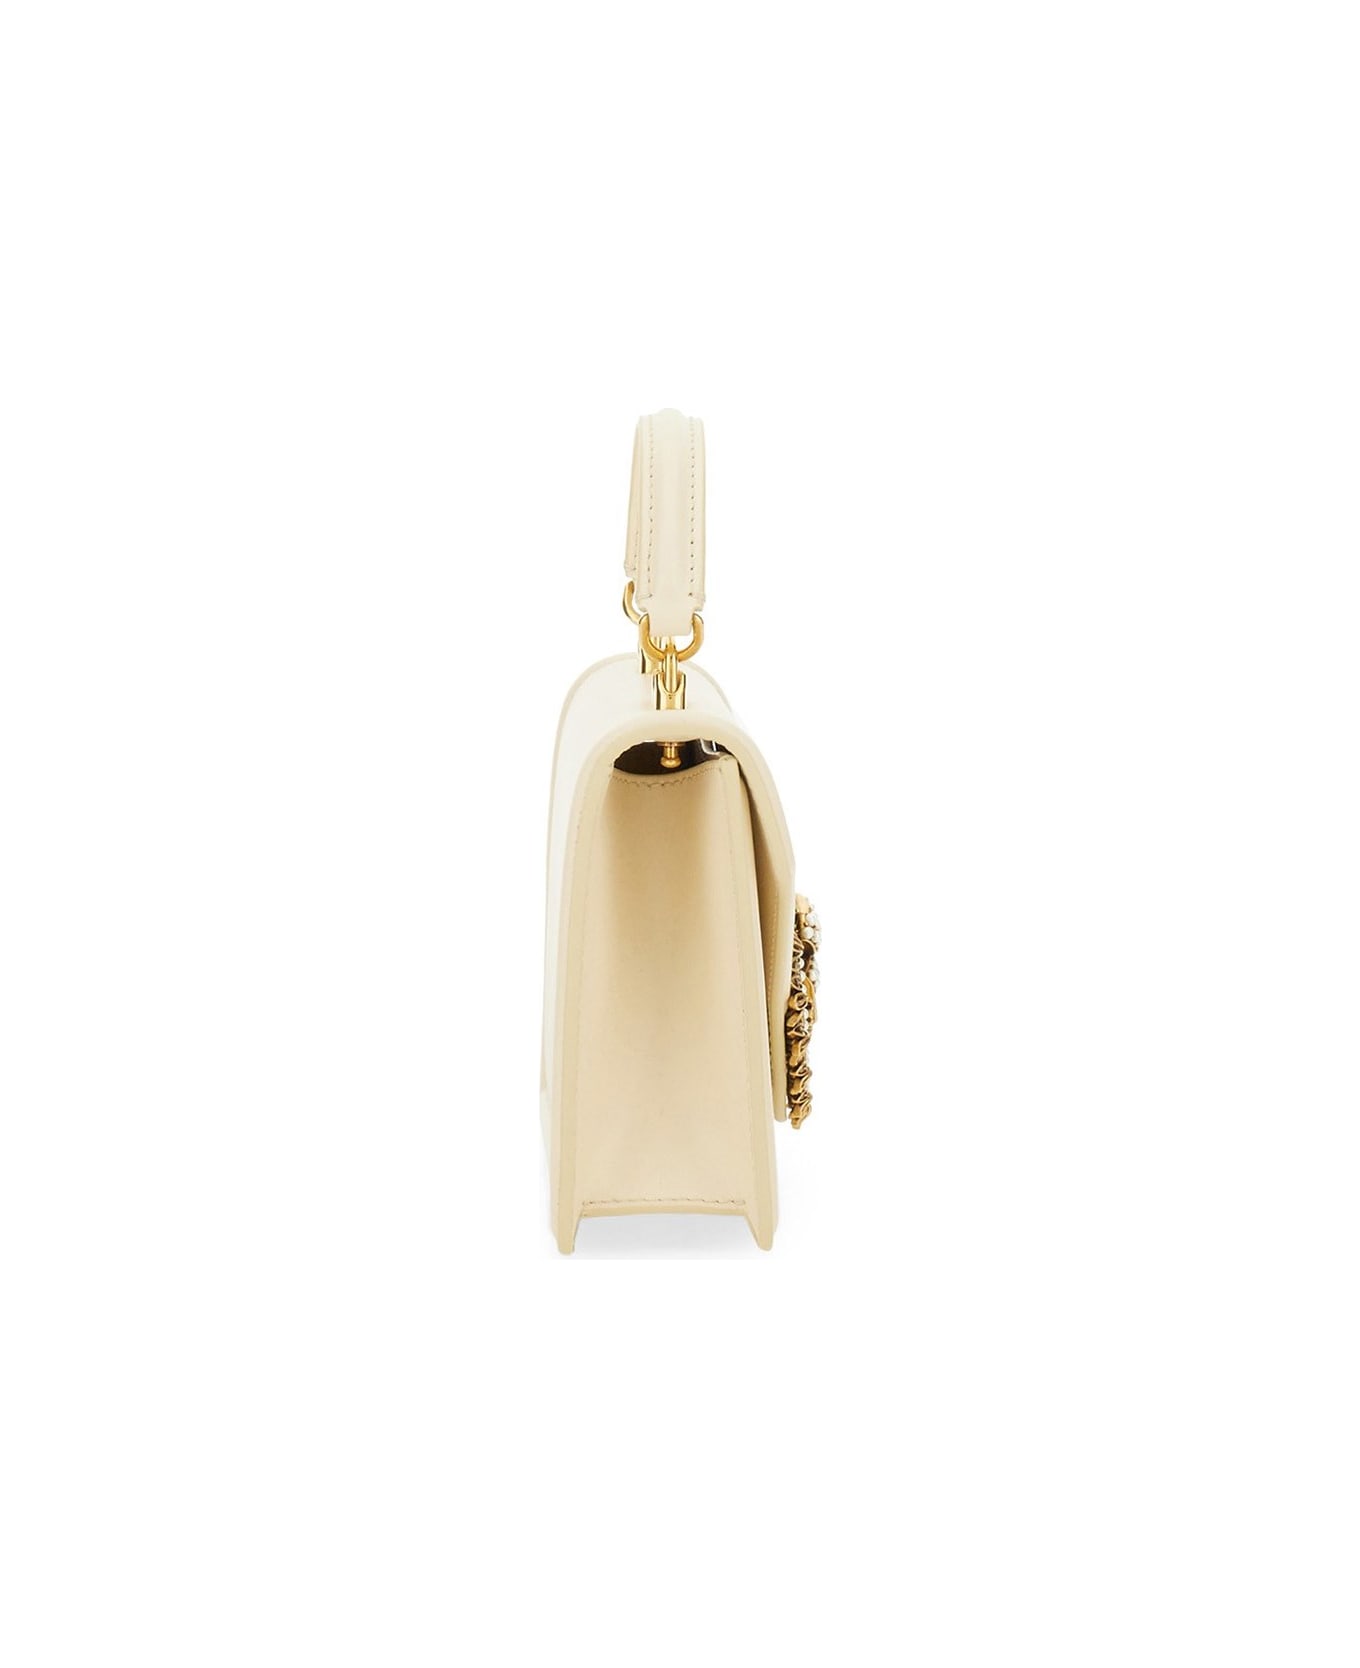 Dolce & Gabbana Devotion Handbag - Butter